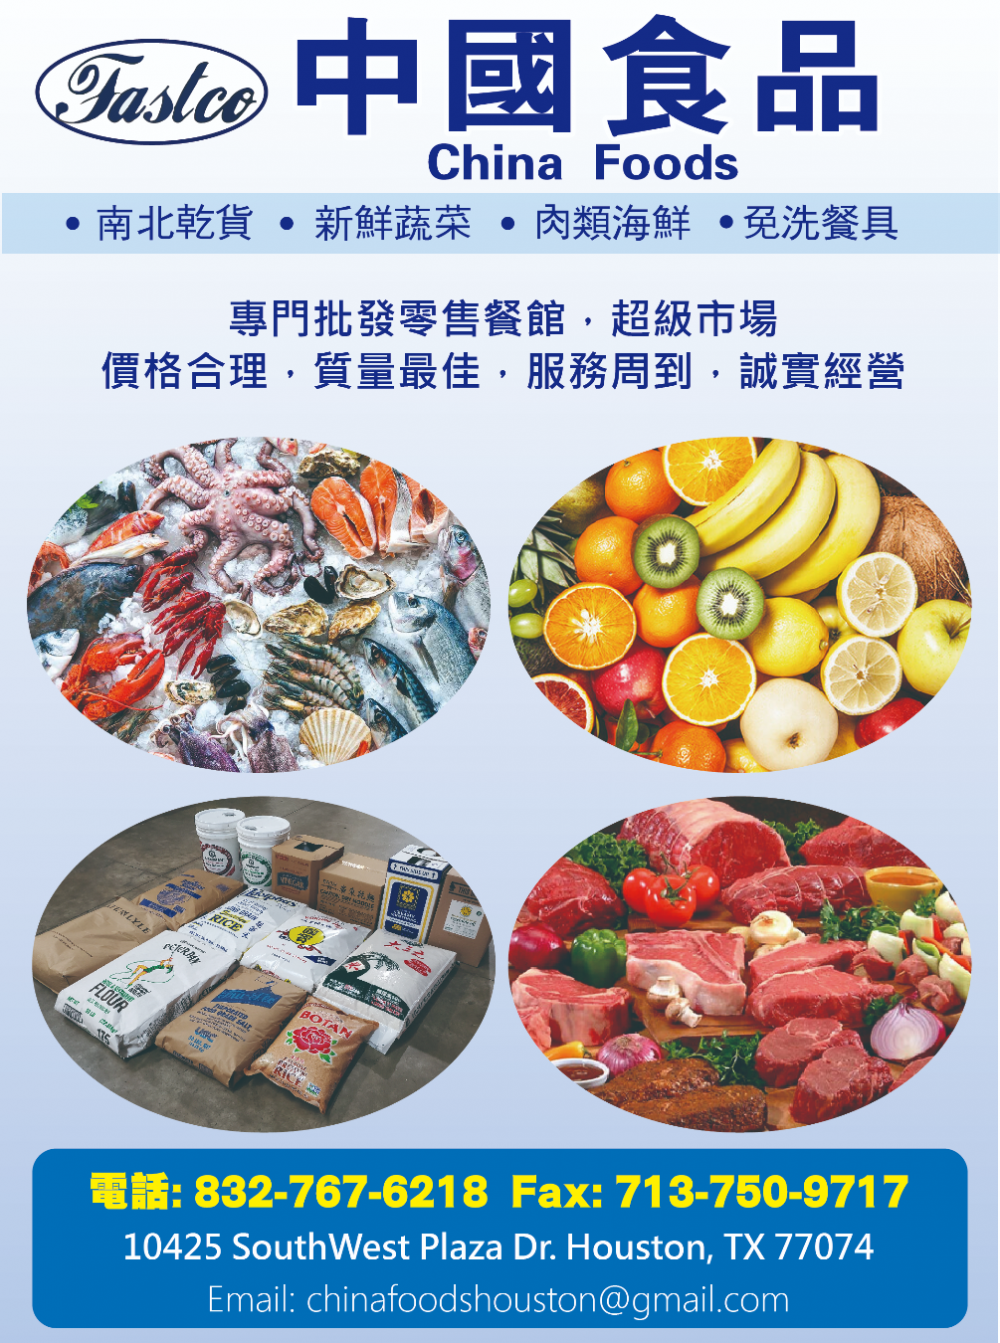 Fastco  China Foods中国食品公司